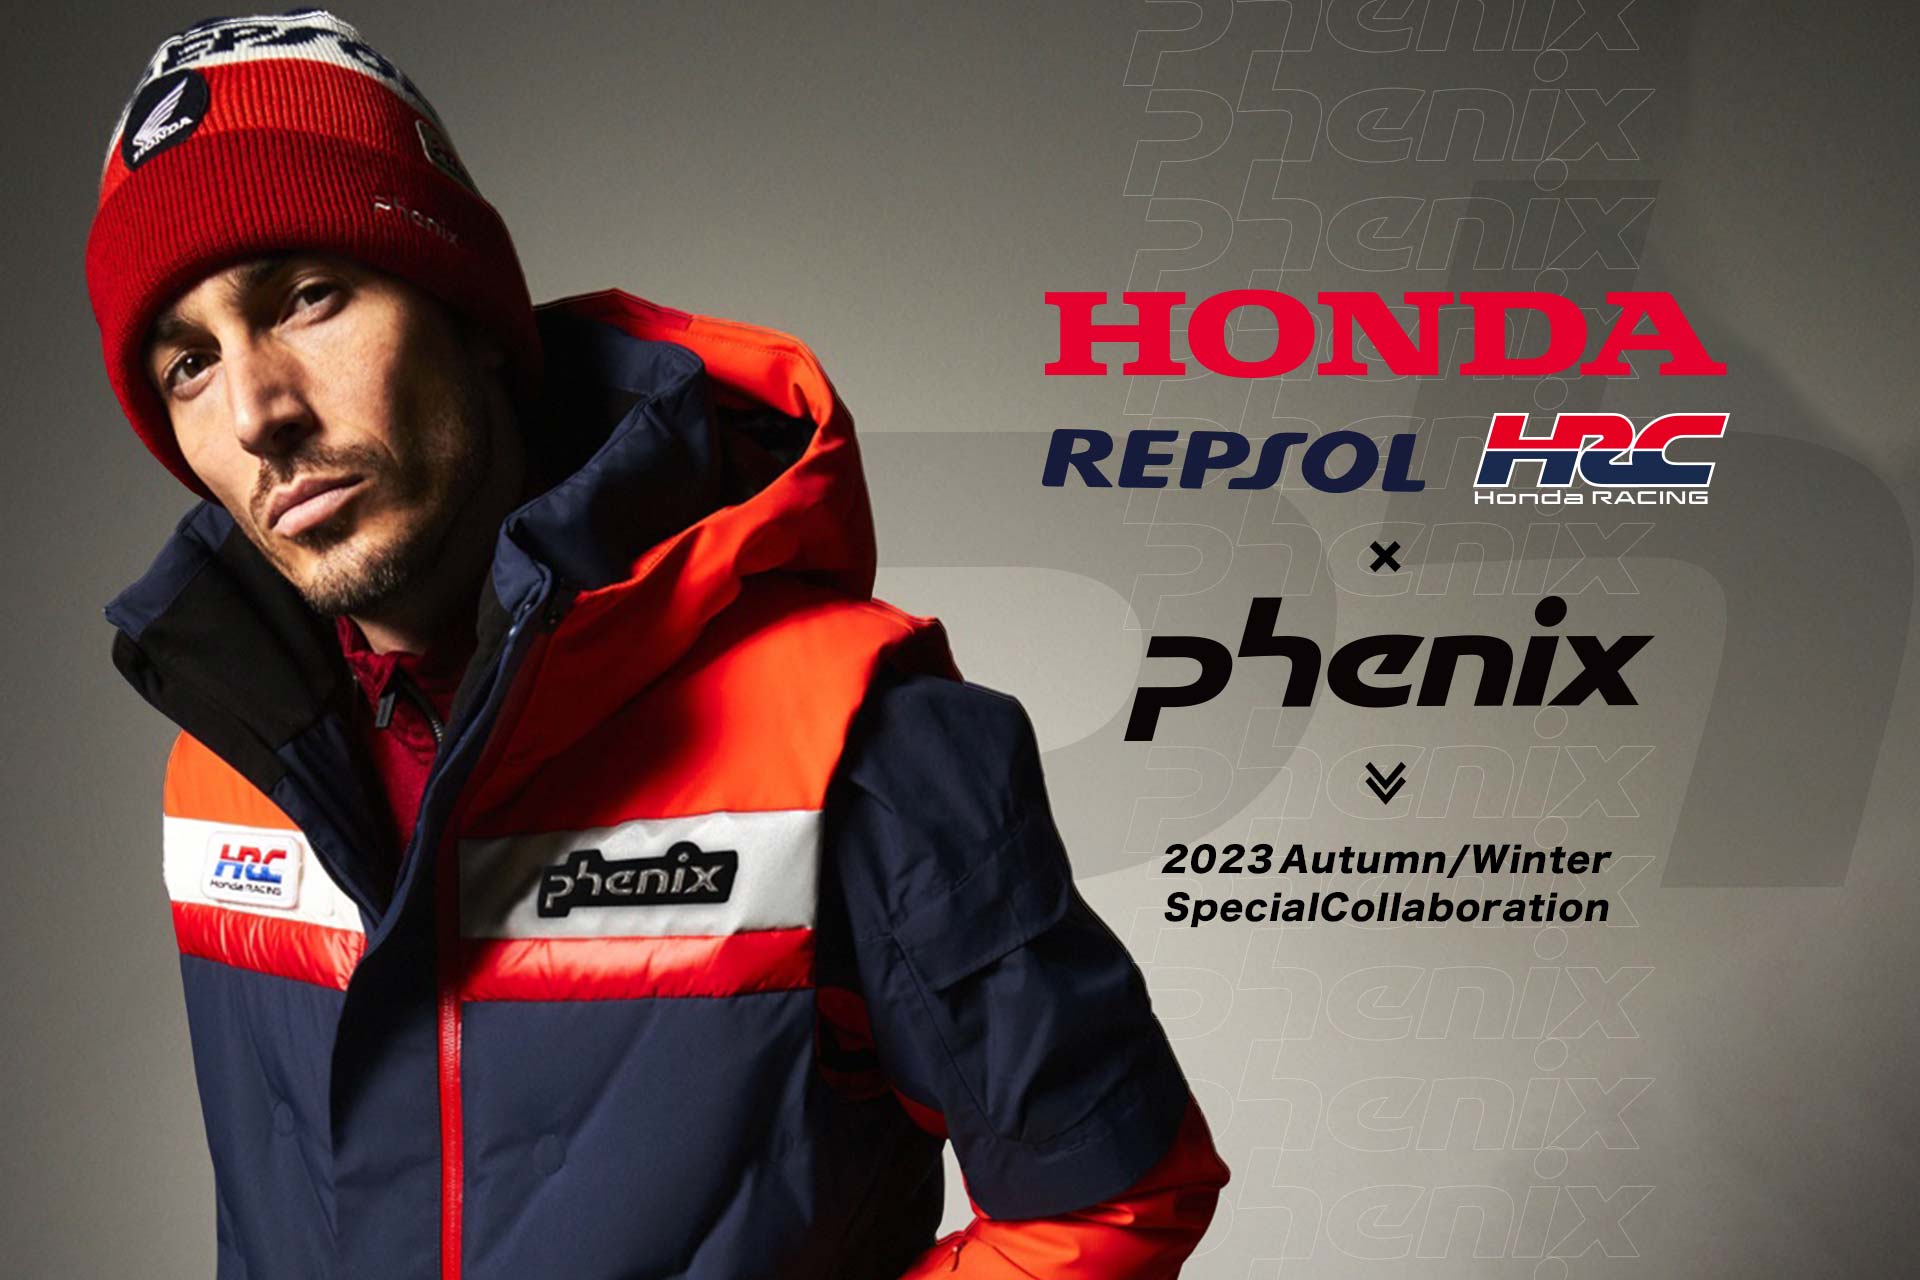 「Honda」とスキーブランド「phenix」のコラボが実現。9月4日より先行予約がスタート